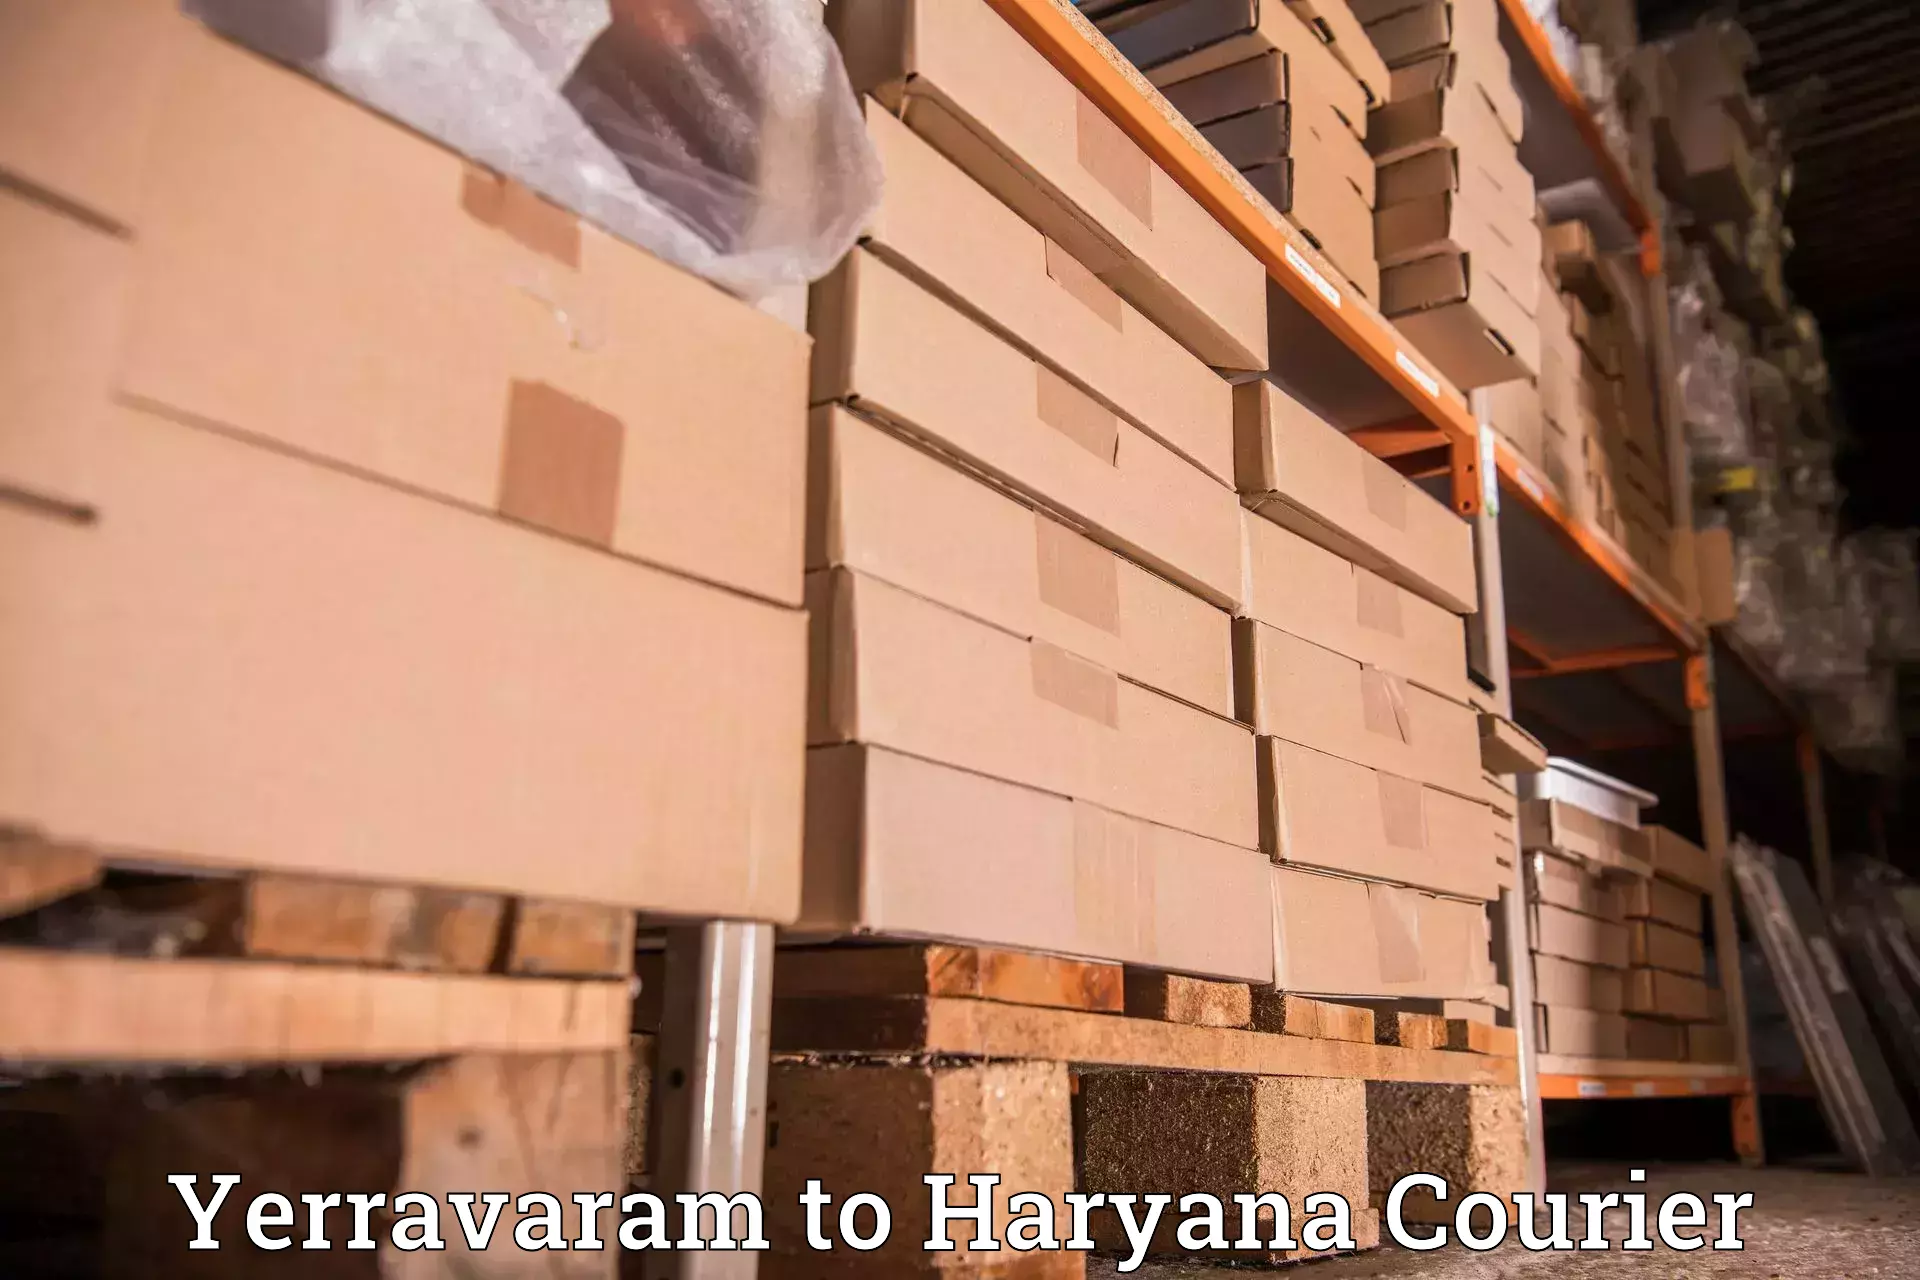 Quick dispatch service Yerravaram to Hansi